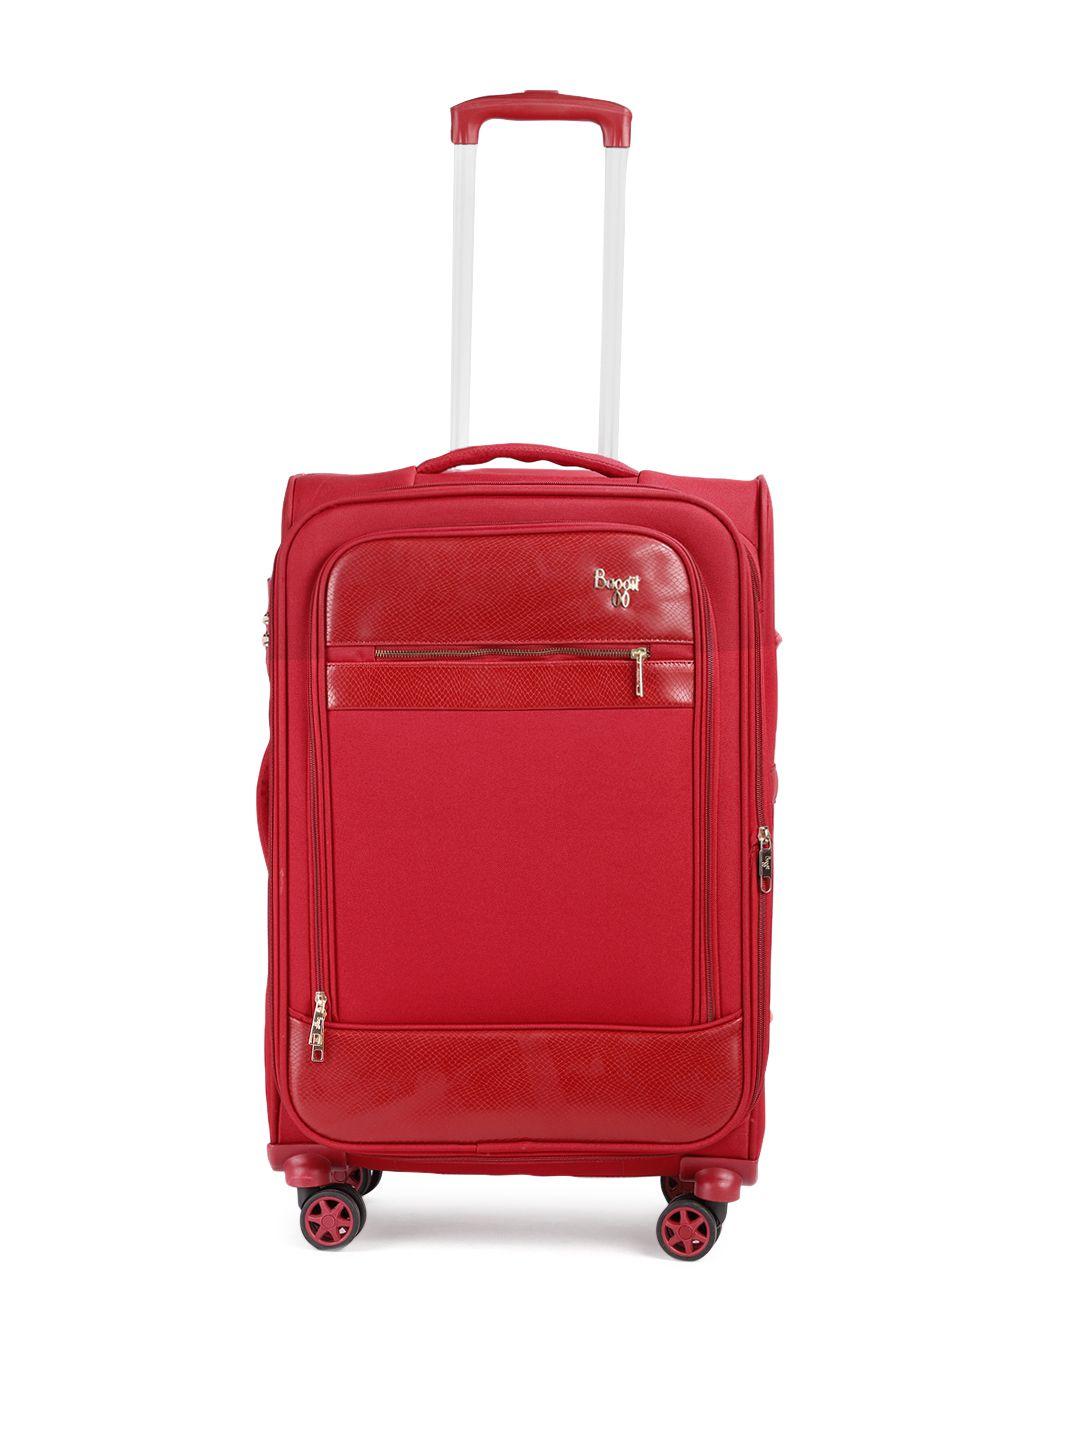 baggit aspire textured soft-sided medium trolley suitcase